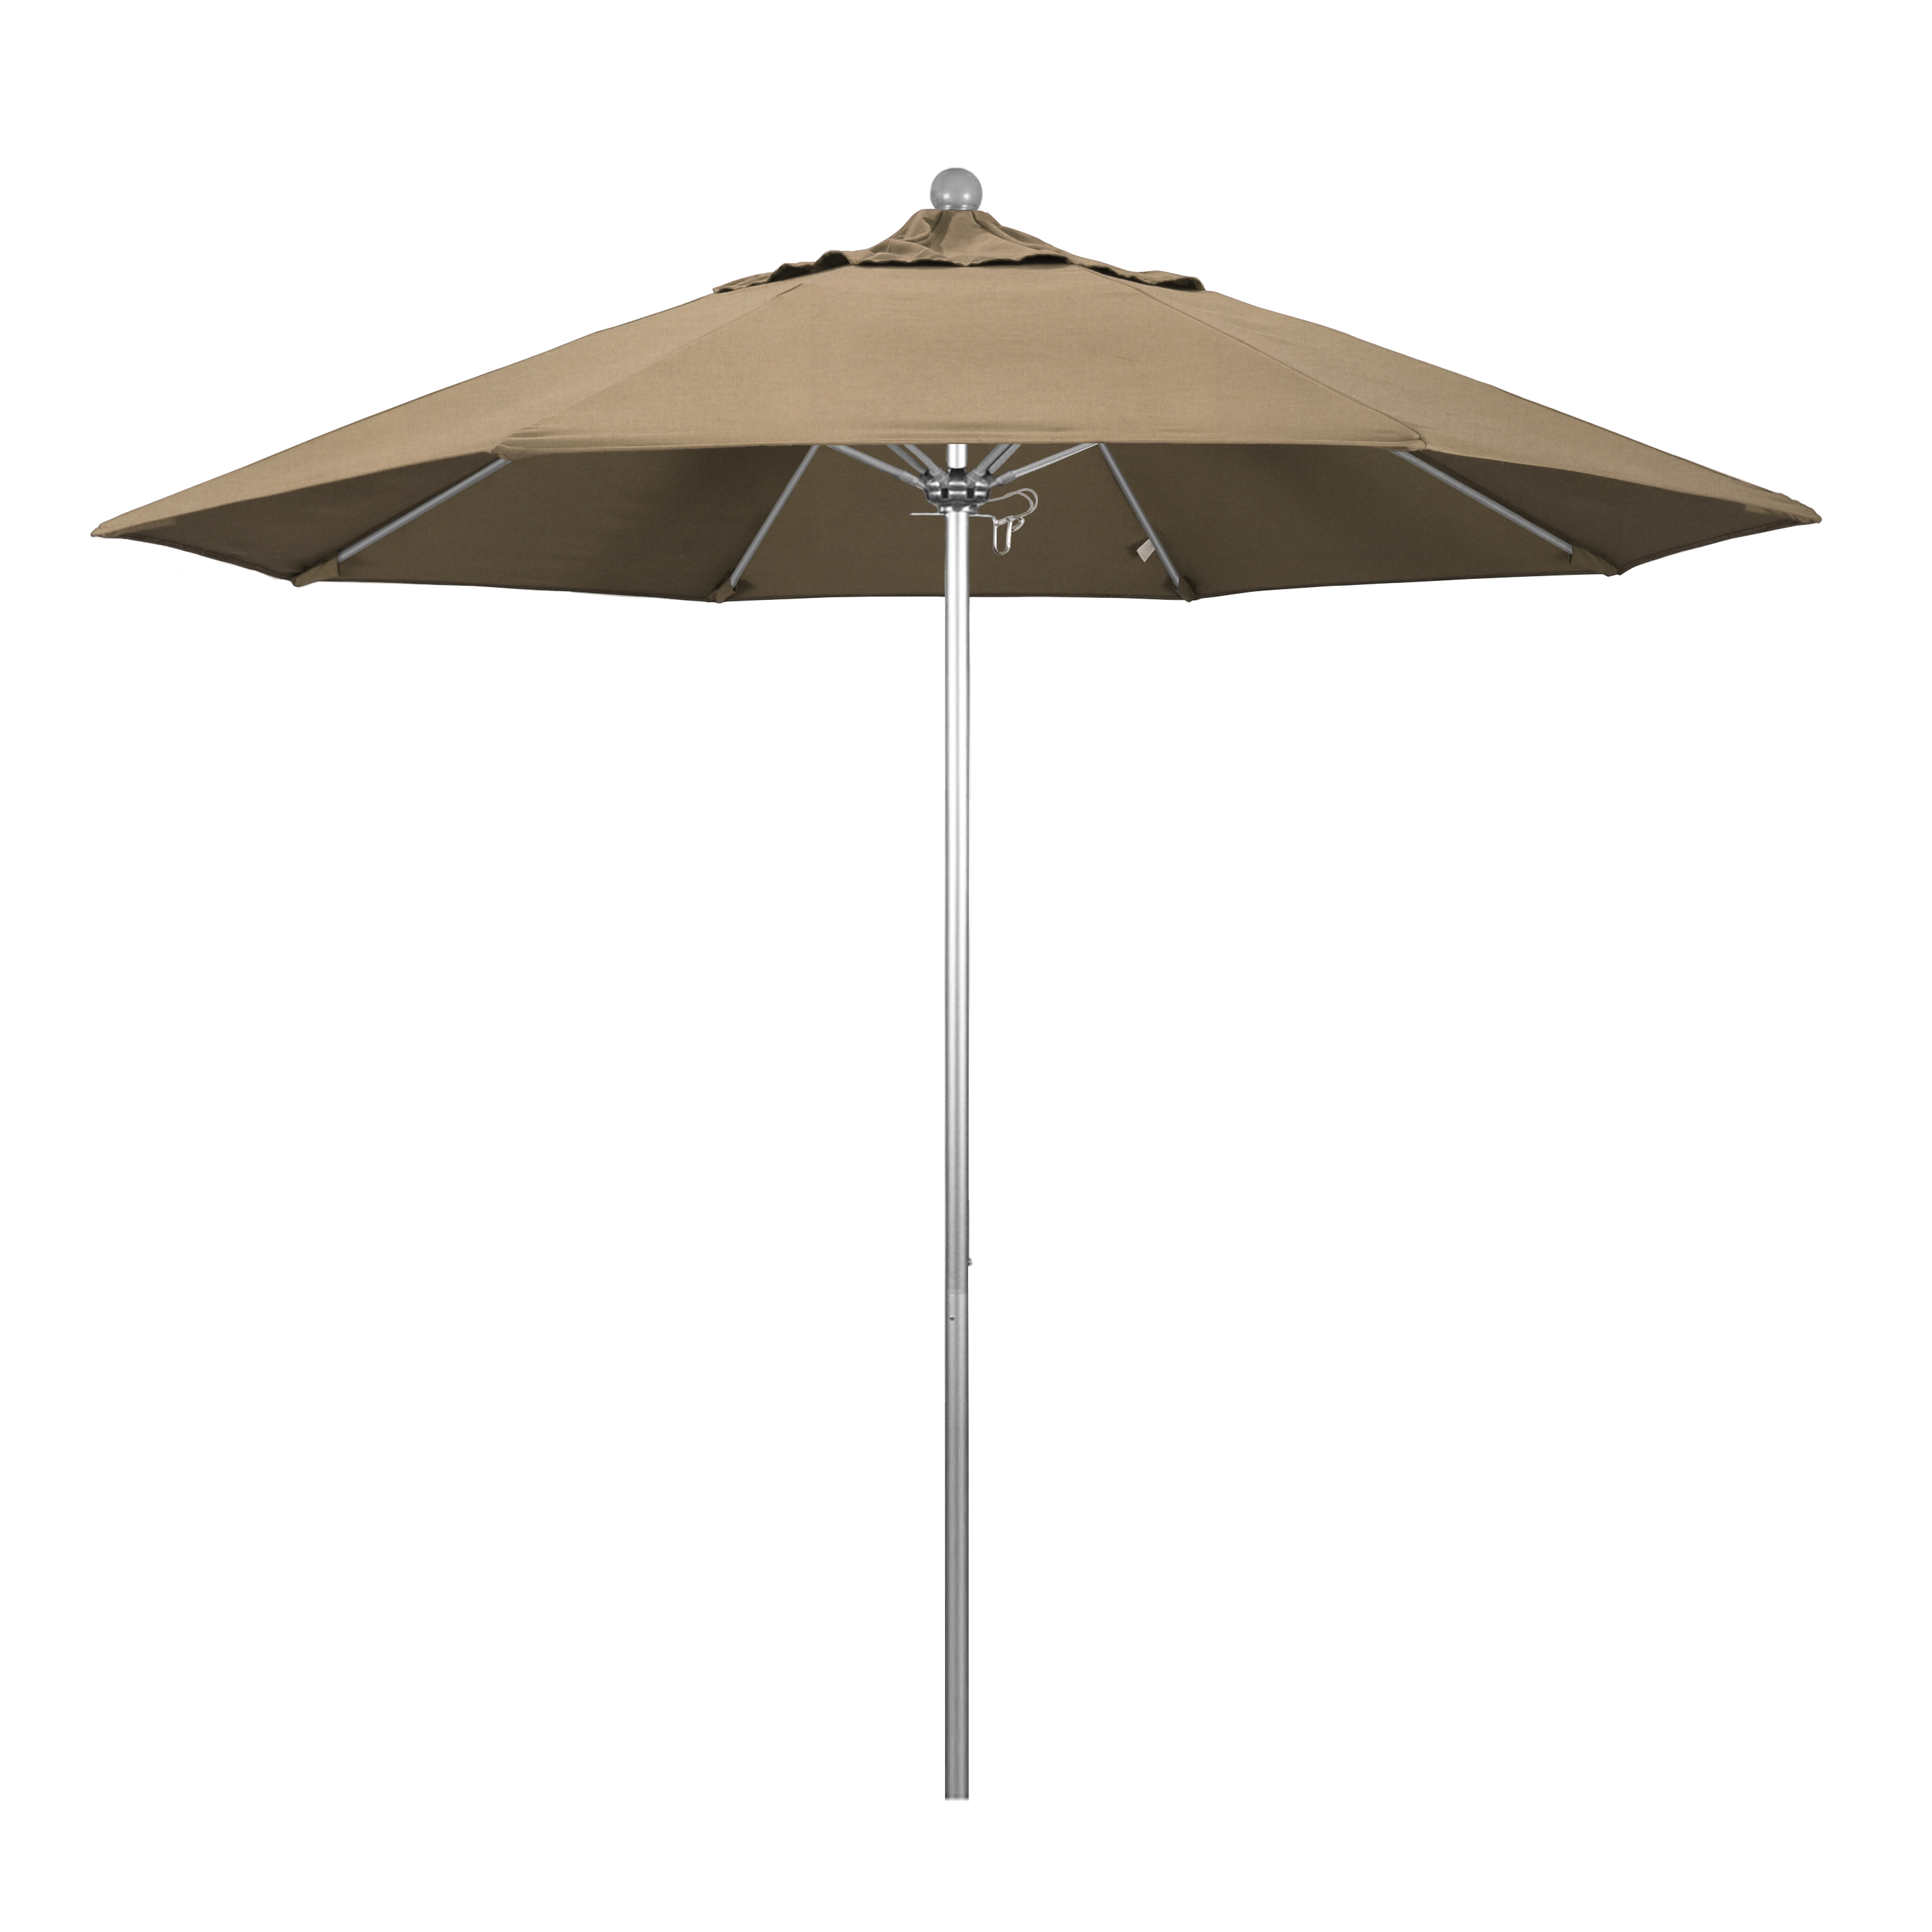 Alto908002-5476 9 Ft. Fiberglass Market Umbrella Pulley Open S Anodized-sunbrella-heather Beige